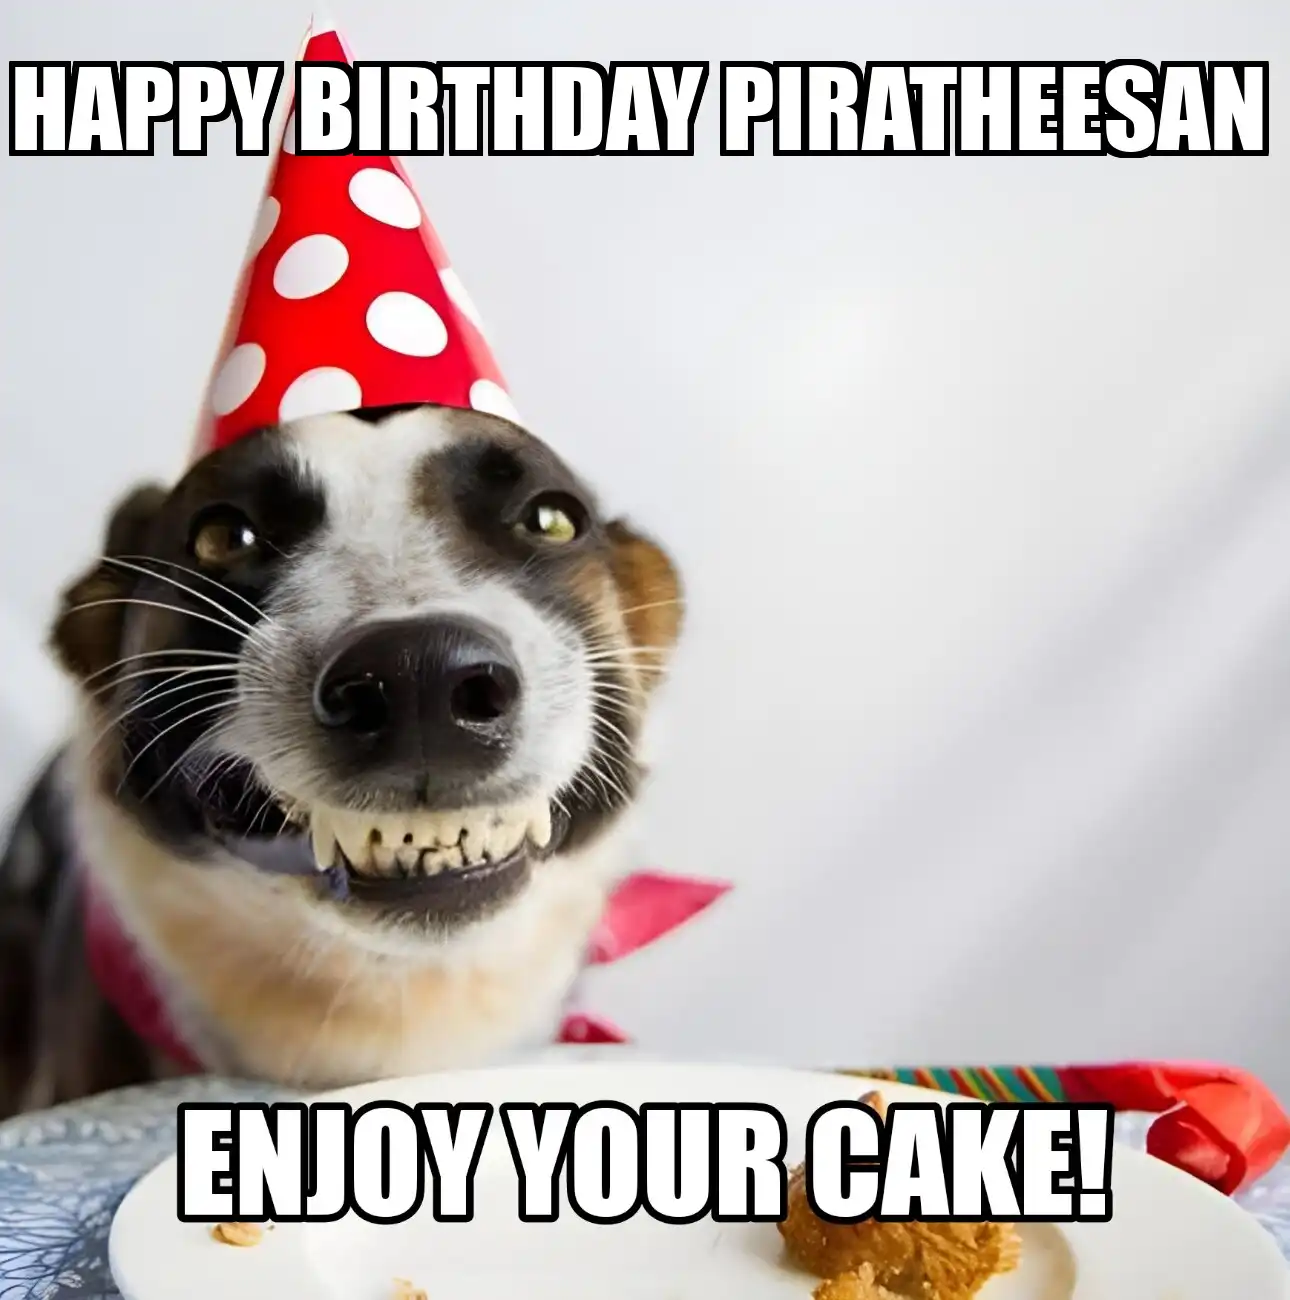 Happy Birthday Piratheesan Enjoy Your Cake Dog Meme